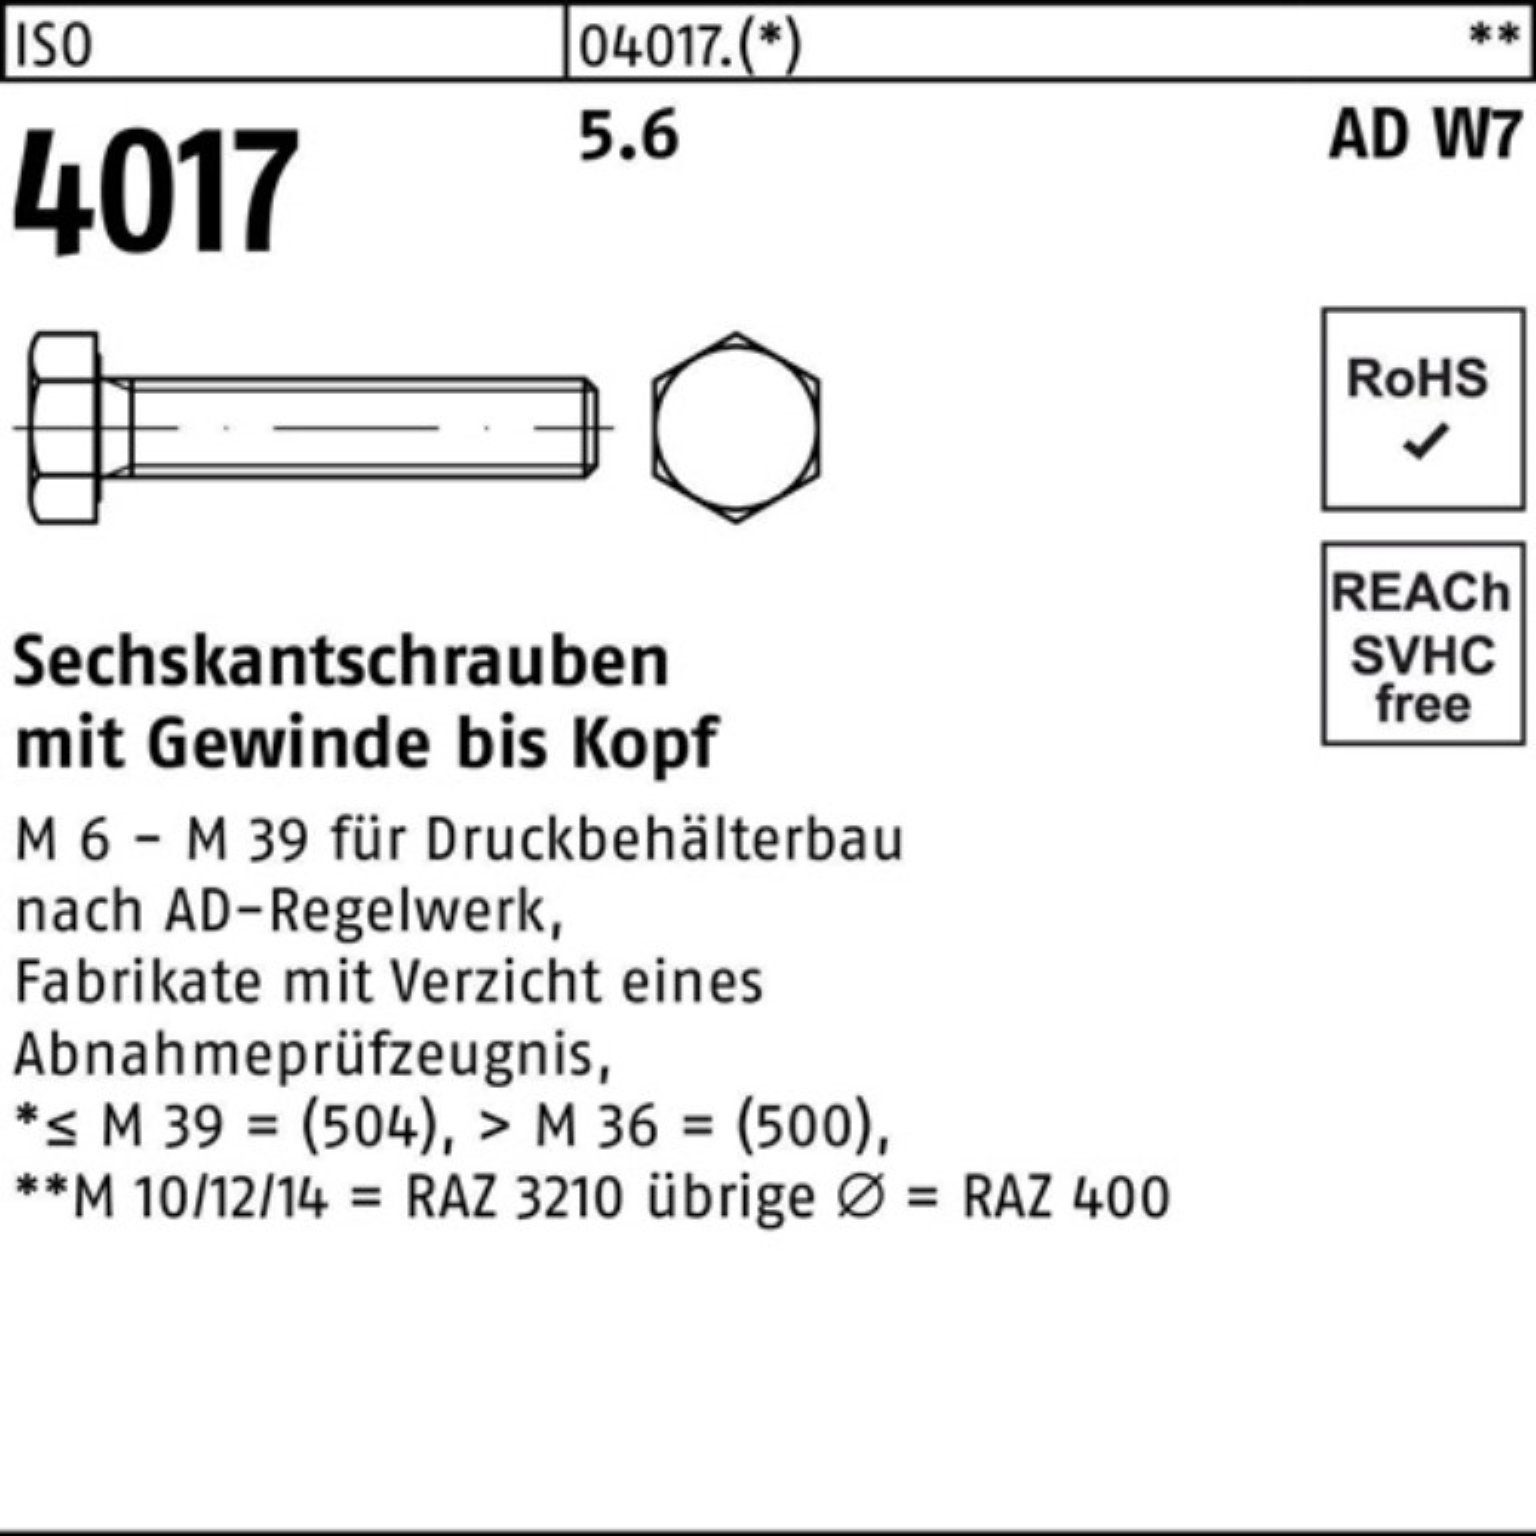 Bufab 65 4017 M27x IS 100er W7 Sechskantschraube Pack AD 1 VG Sechskantschraube ISO Stück 5.6